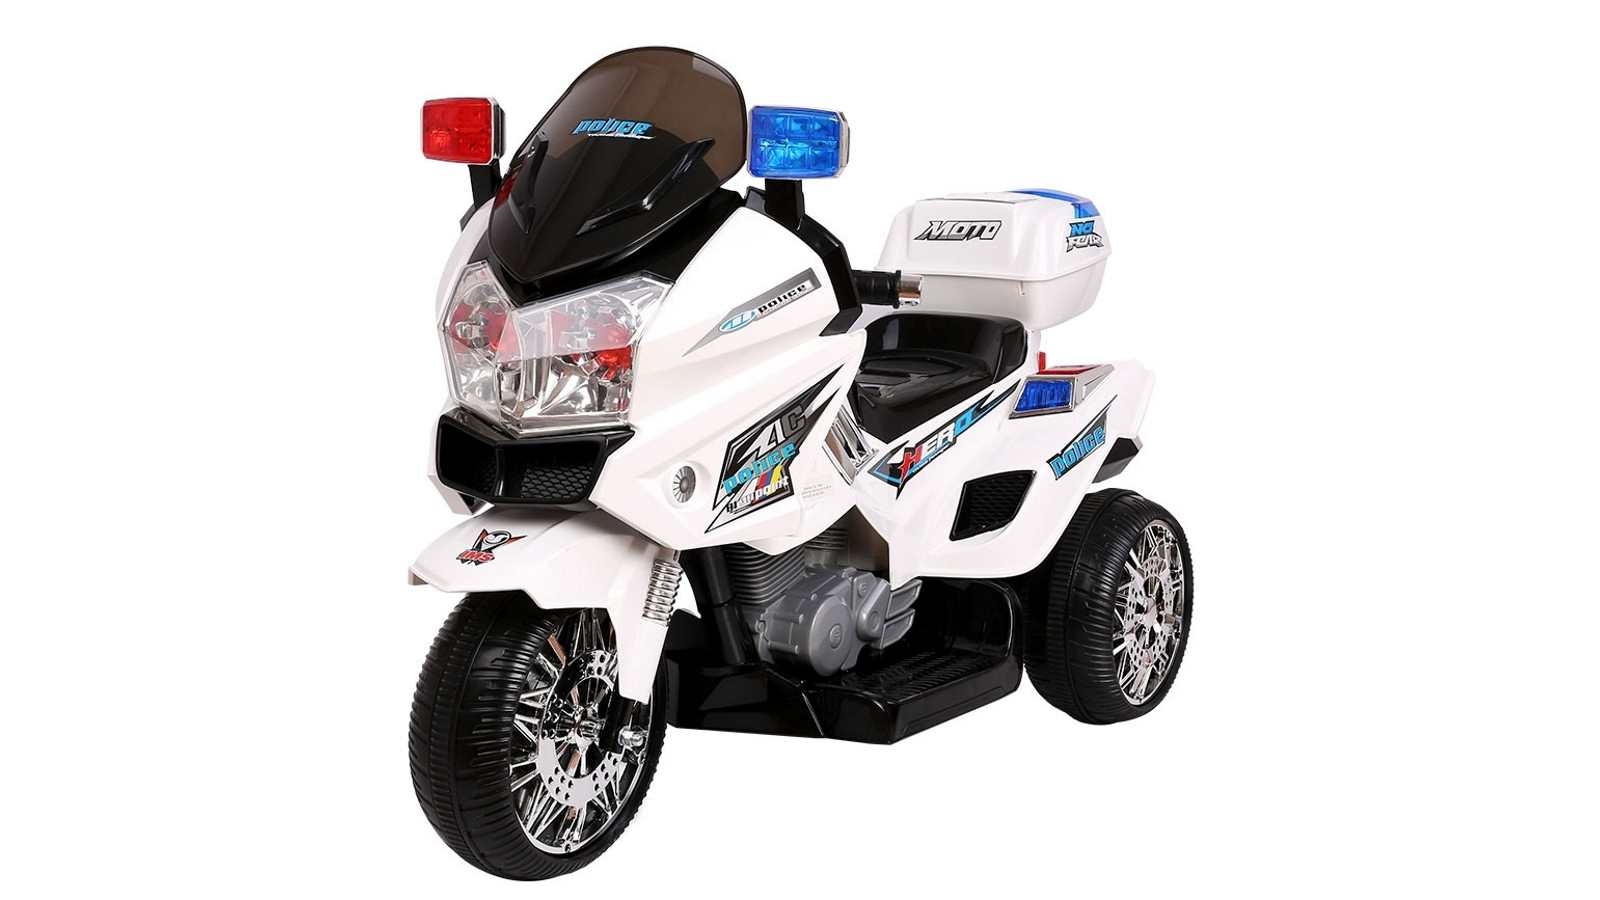 police bike for kid